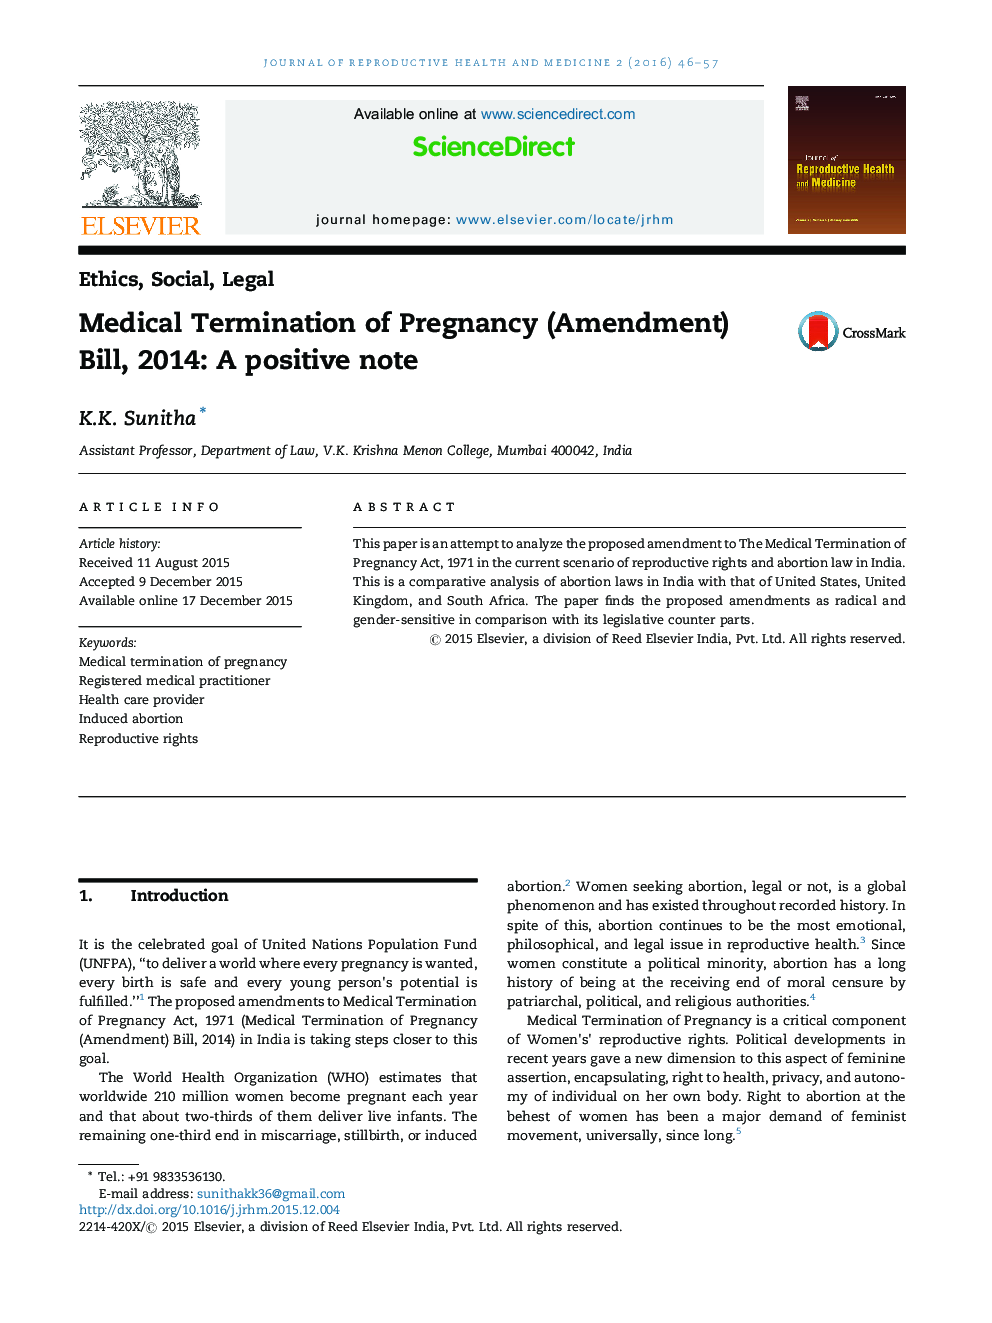 Medical Termination of Pregnancy (Amendment) Bill, 2014: A positive note